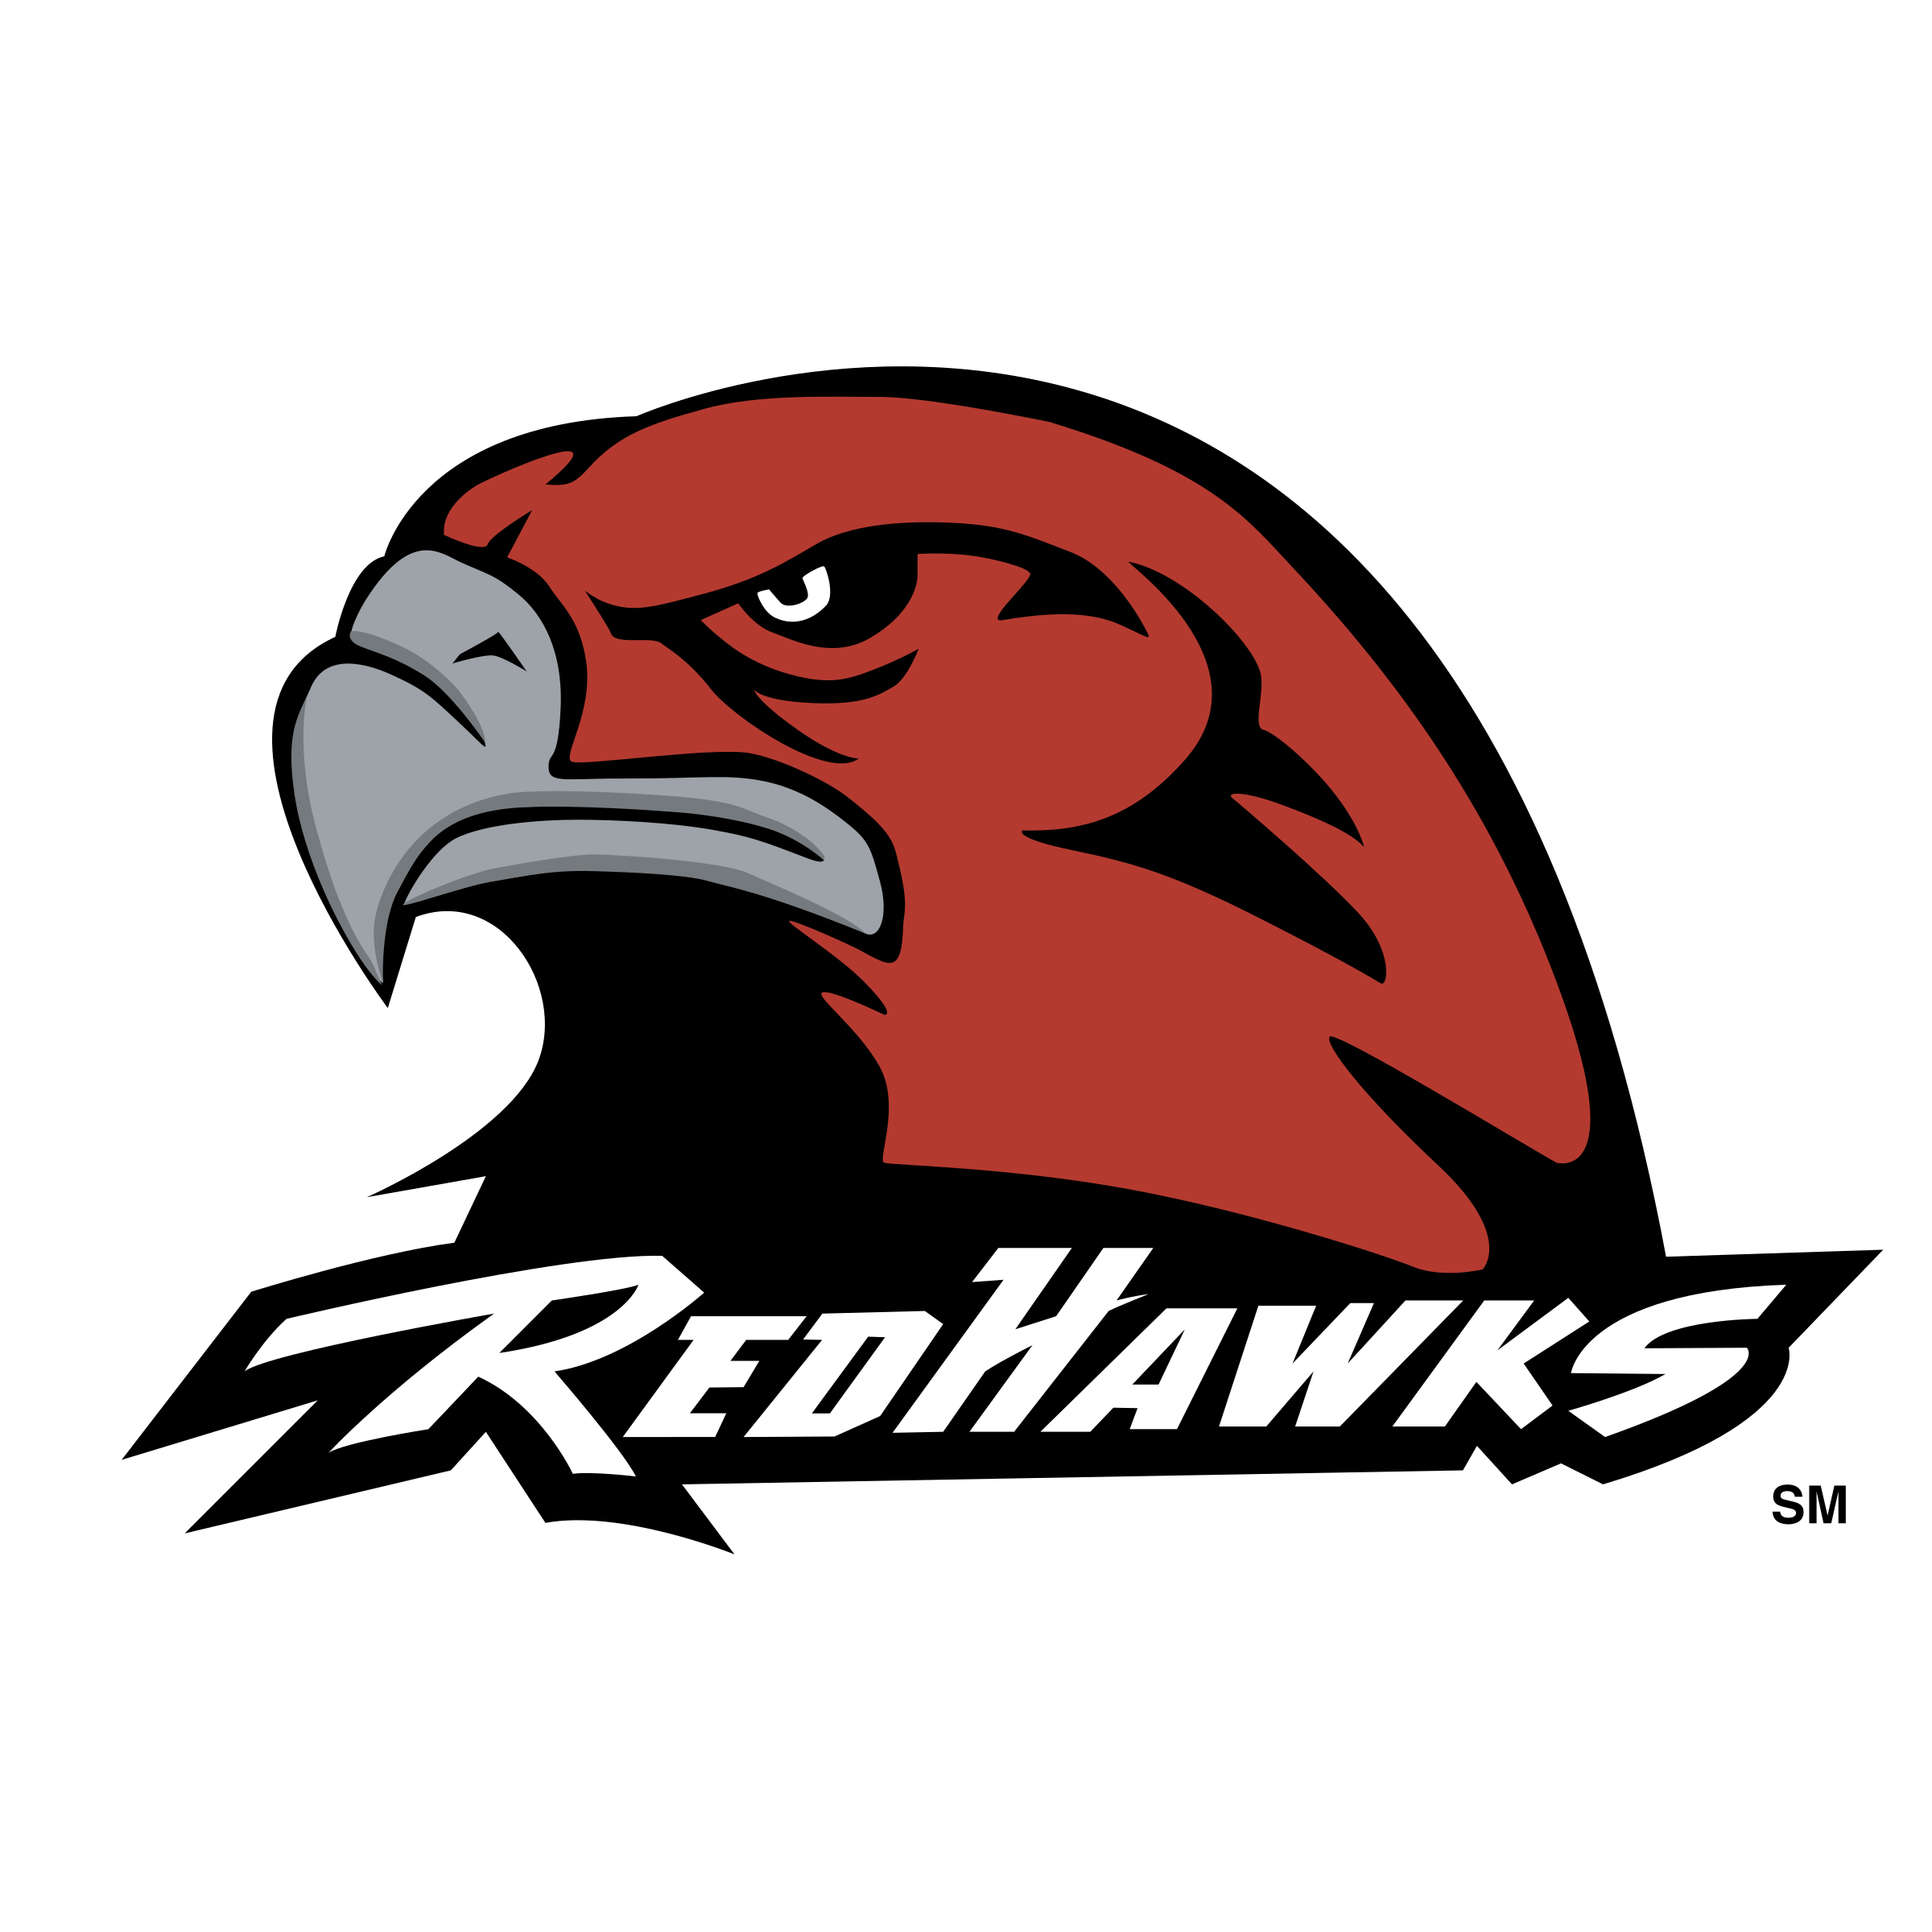 RedHawks Logo - Miami Redhawks Logo PNG Transparent & SVG Vector - Freebie Supply